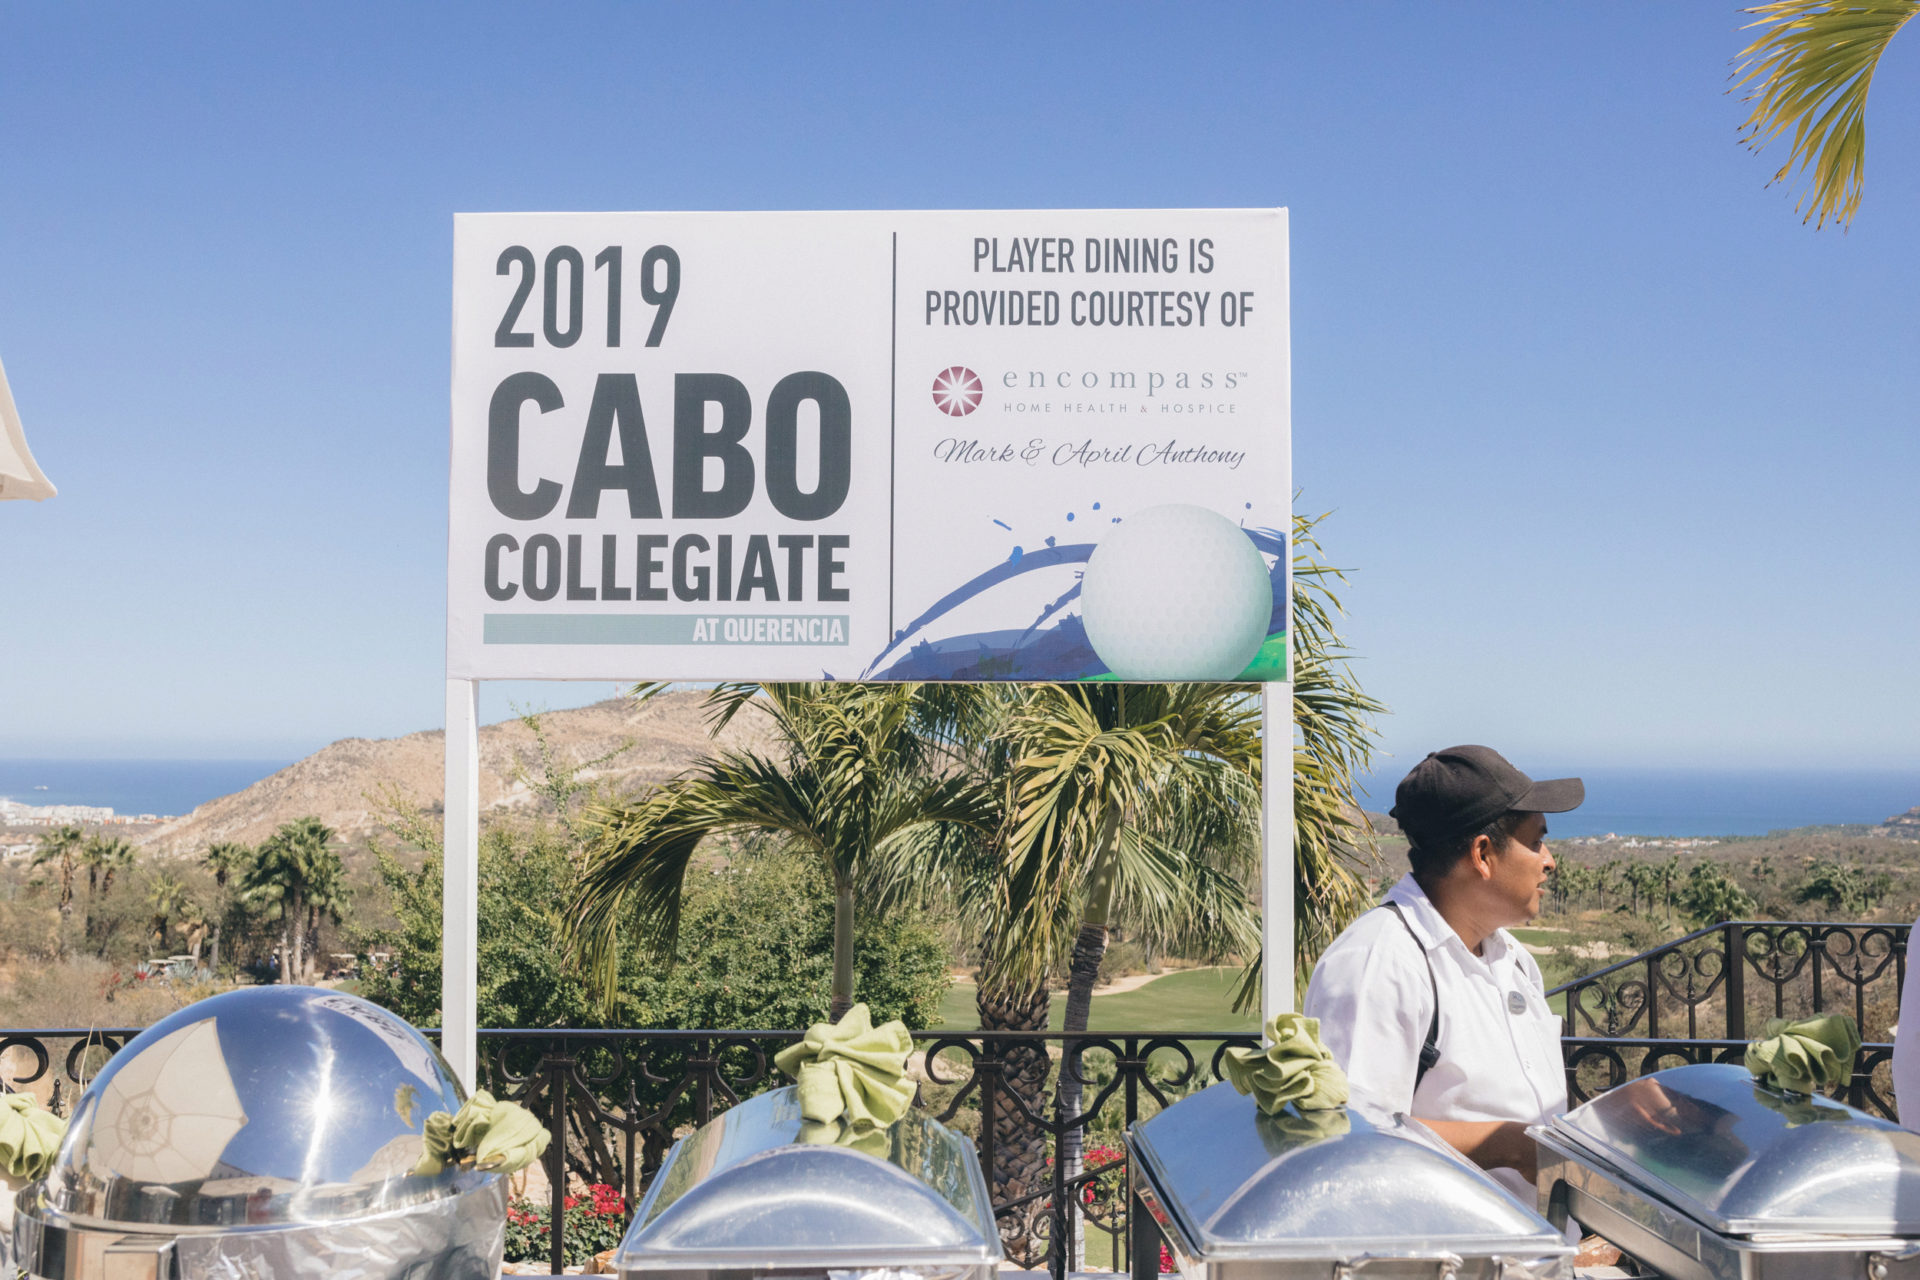 Cabo Collegiate 2019 Gallery Image